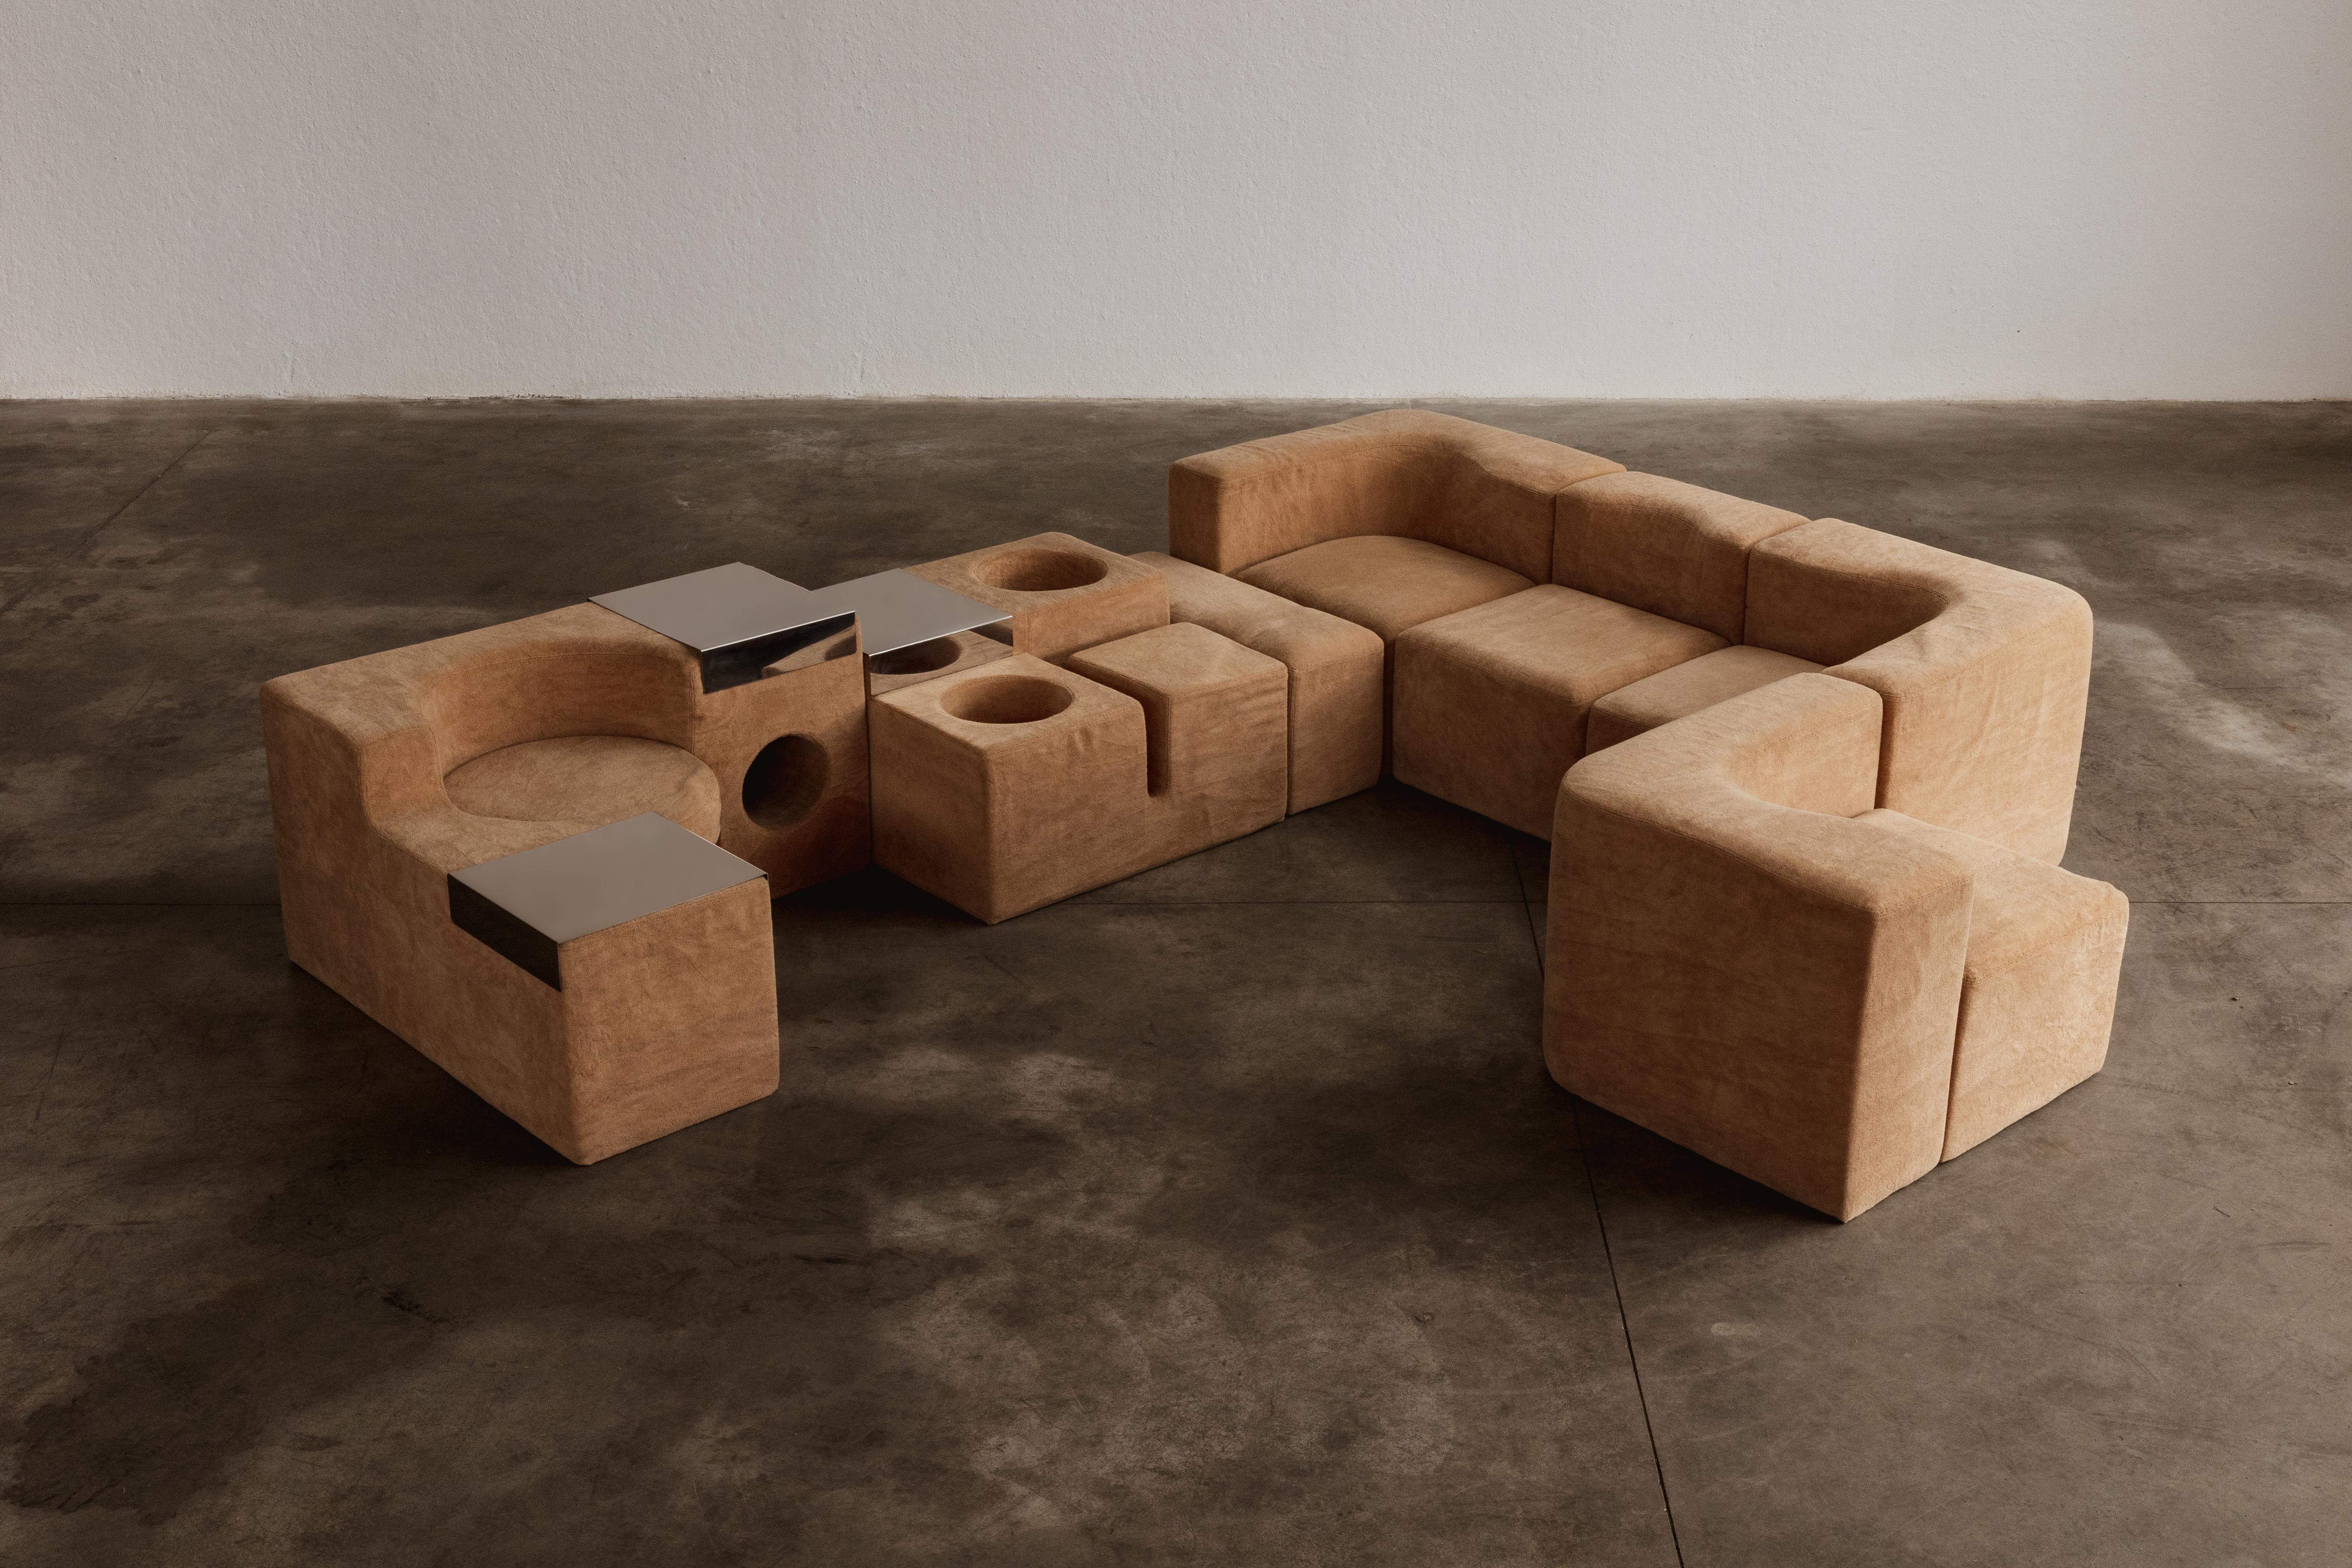 Guido Faleschini “Teorema” Modular Sofa for Mariani, Italy, 1974

Guido Faleschini designed this rare modular sofa as a part of the 